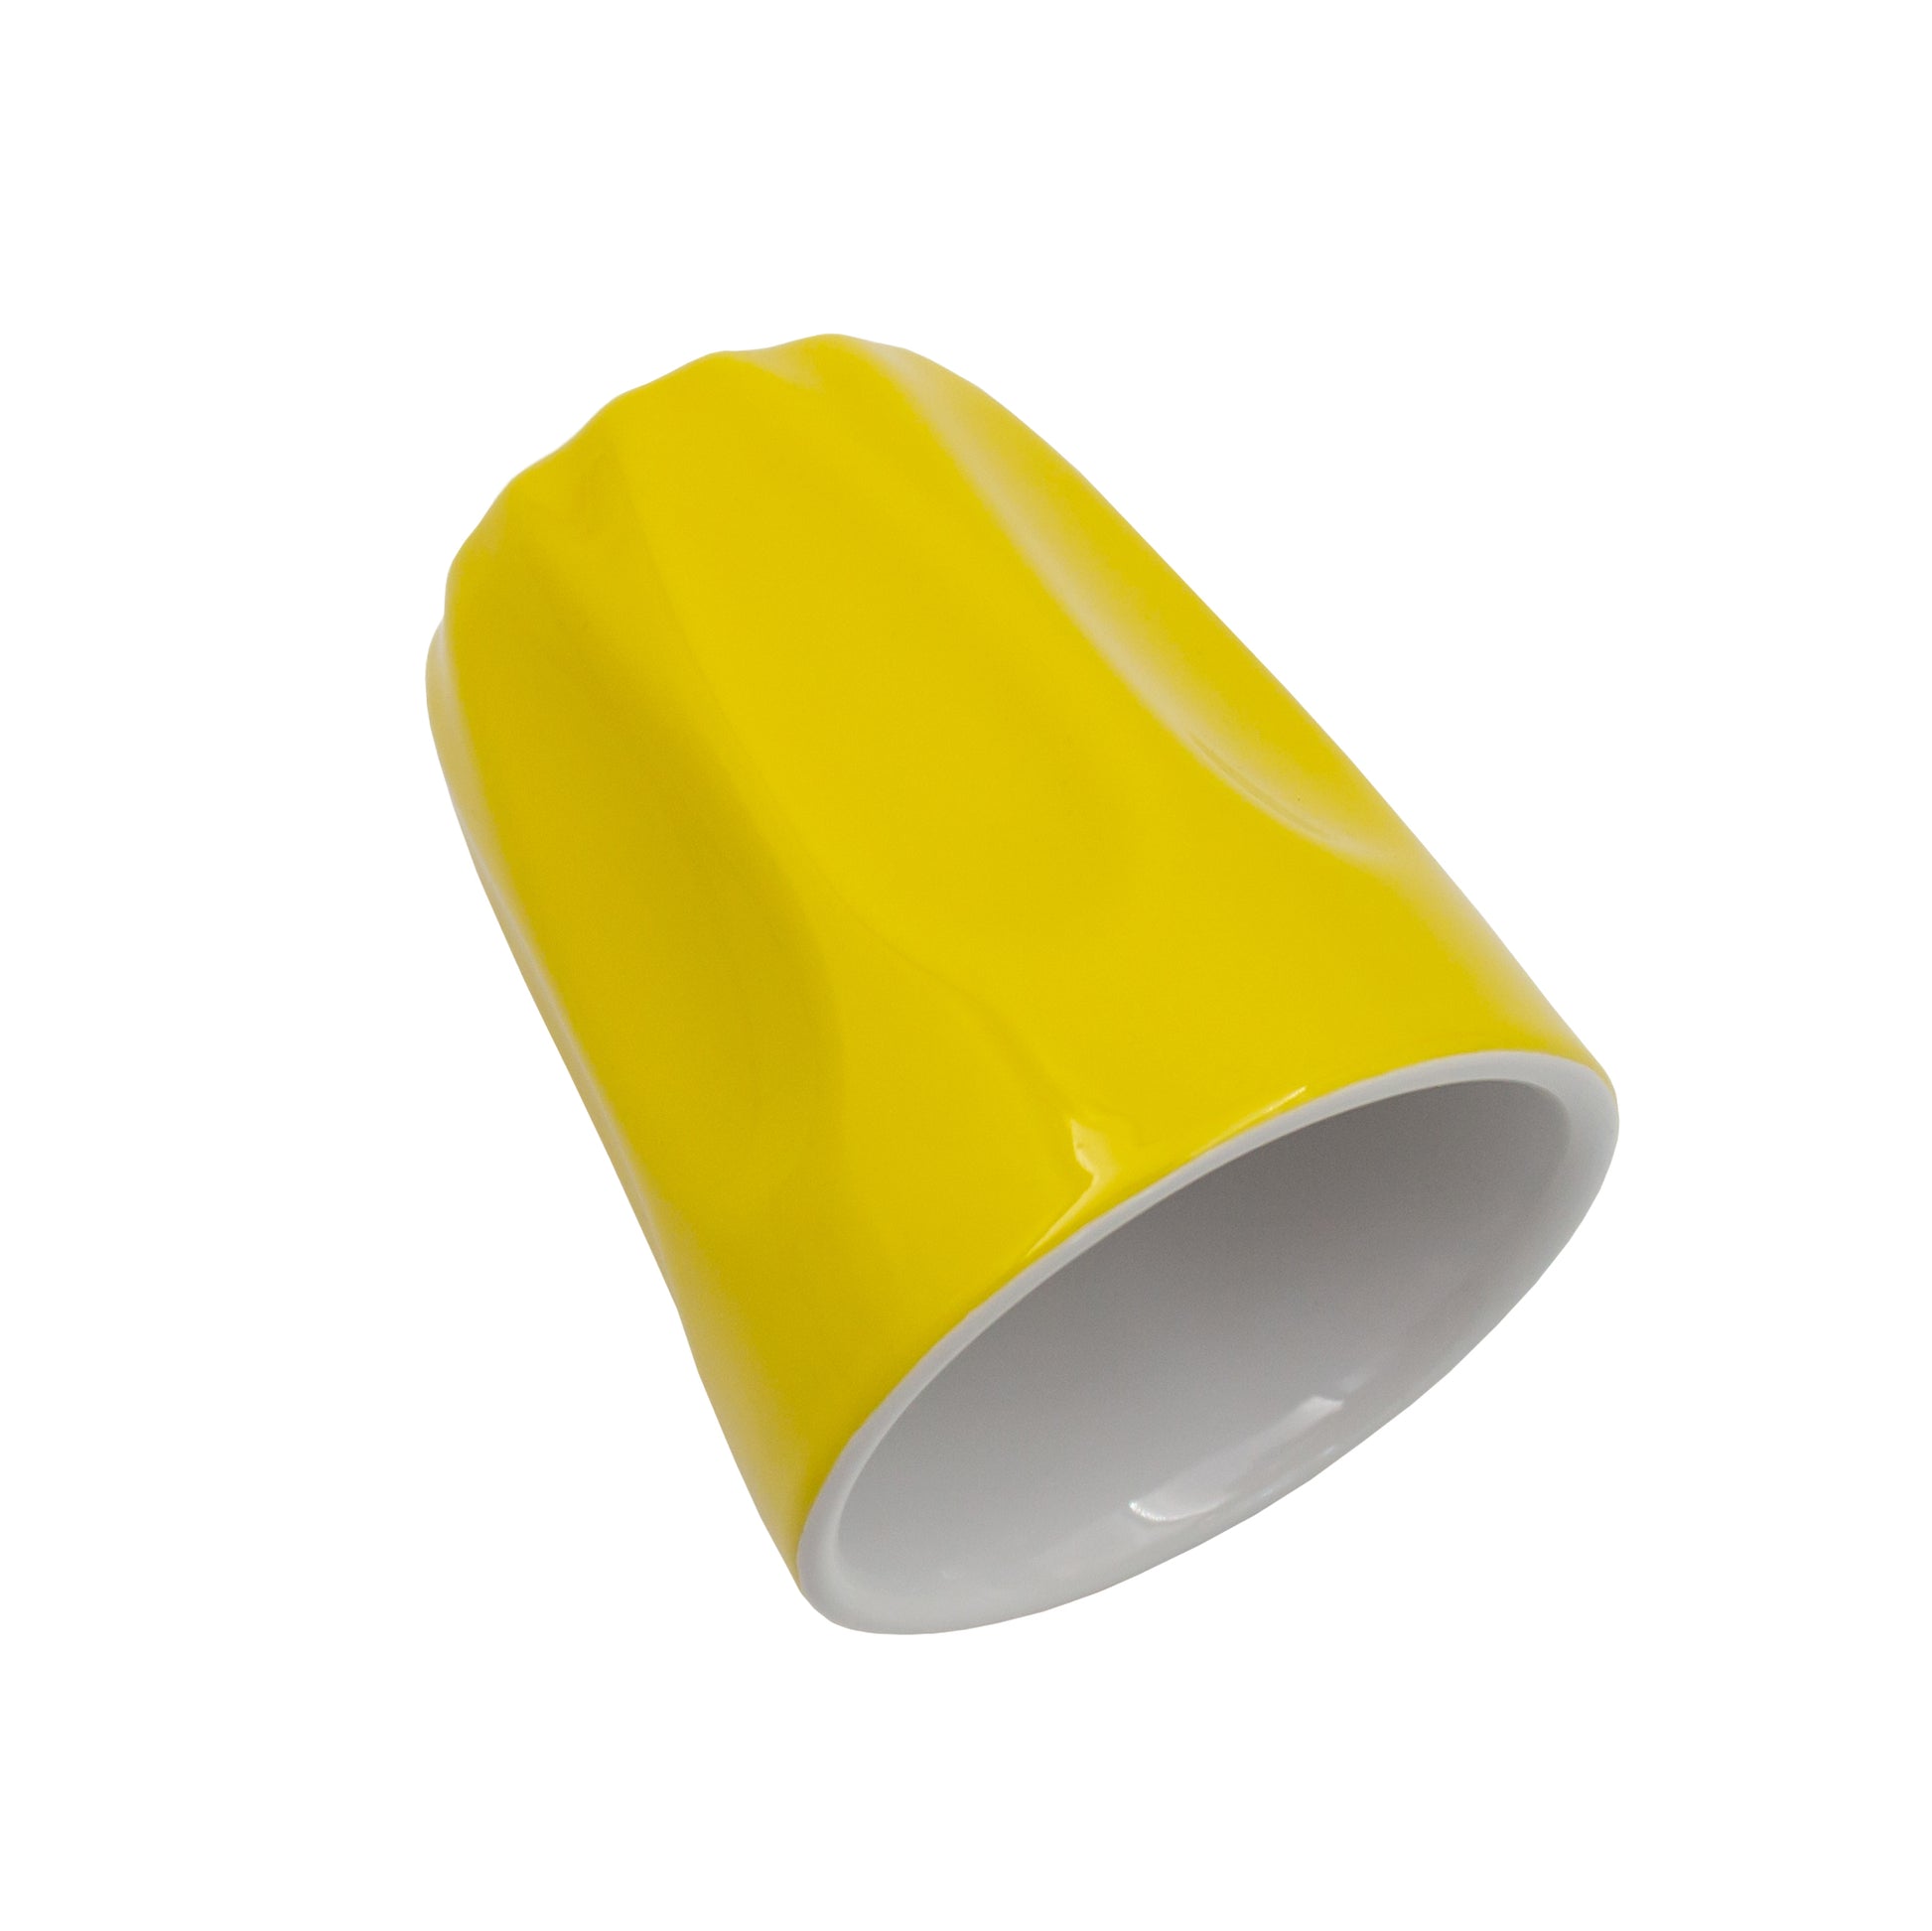 70ml yellow macchiato cup